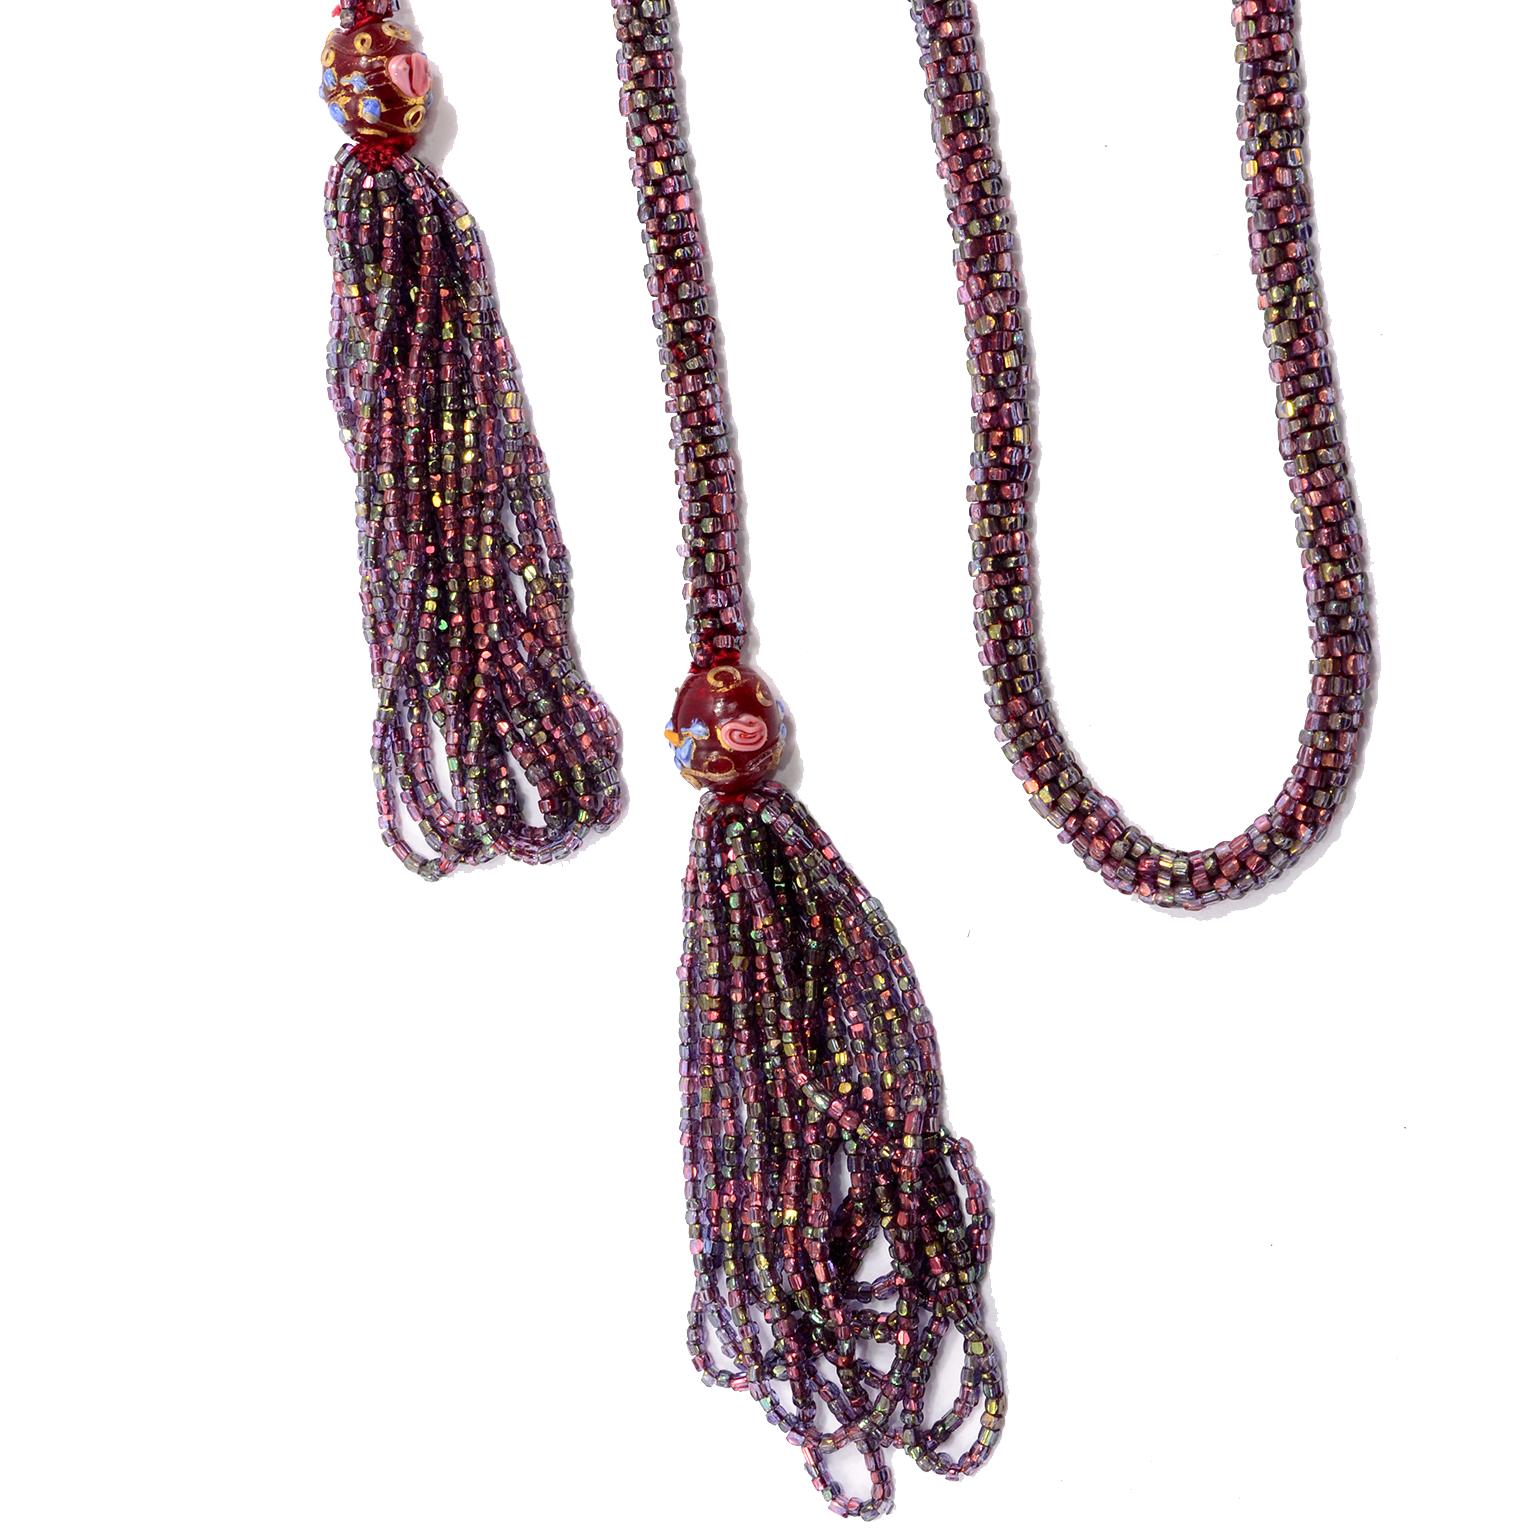 Art Deco Vintage 1920s Sautoir Beaded Tassel Flapper Necklace W Lampwork Beads & Fringe For Sale